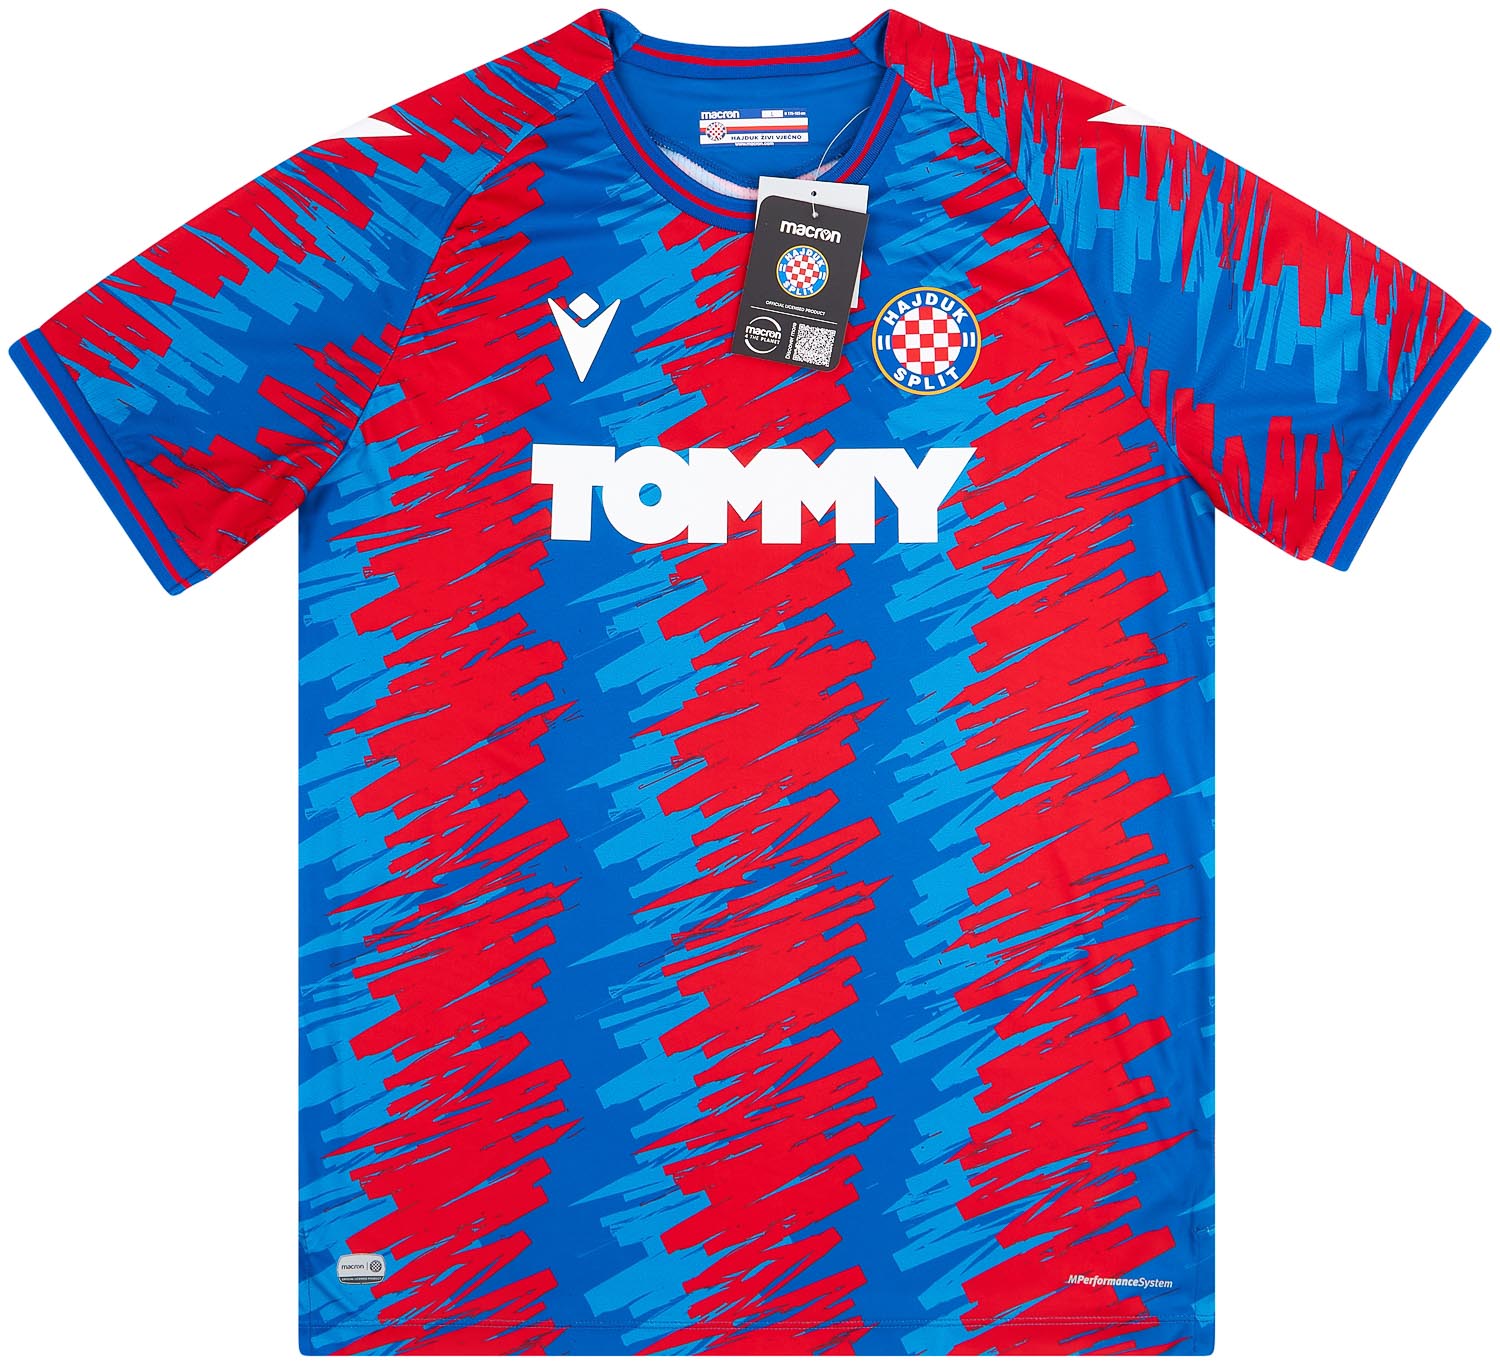 21 22 23 Hajduk Split VUSKOVIC KACANIKLIC Men World Cup 2022 Jerseys COLINA  VUKOVIC K. DIMITROV Home Away Blue Red Shirt Short Sleeves Adult Uniforms  From Sportjersey8, $13.56